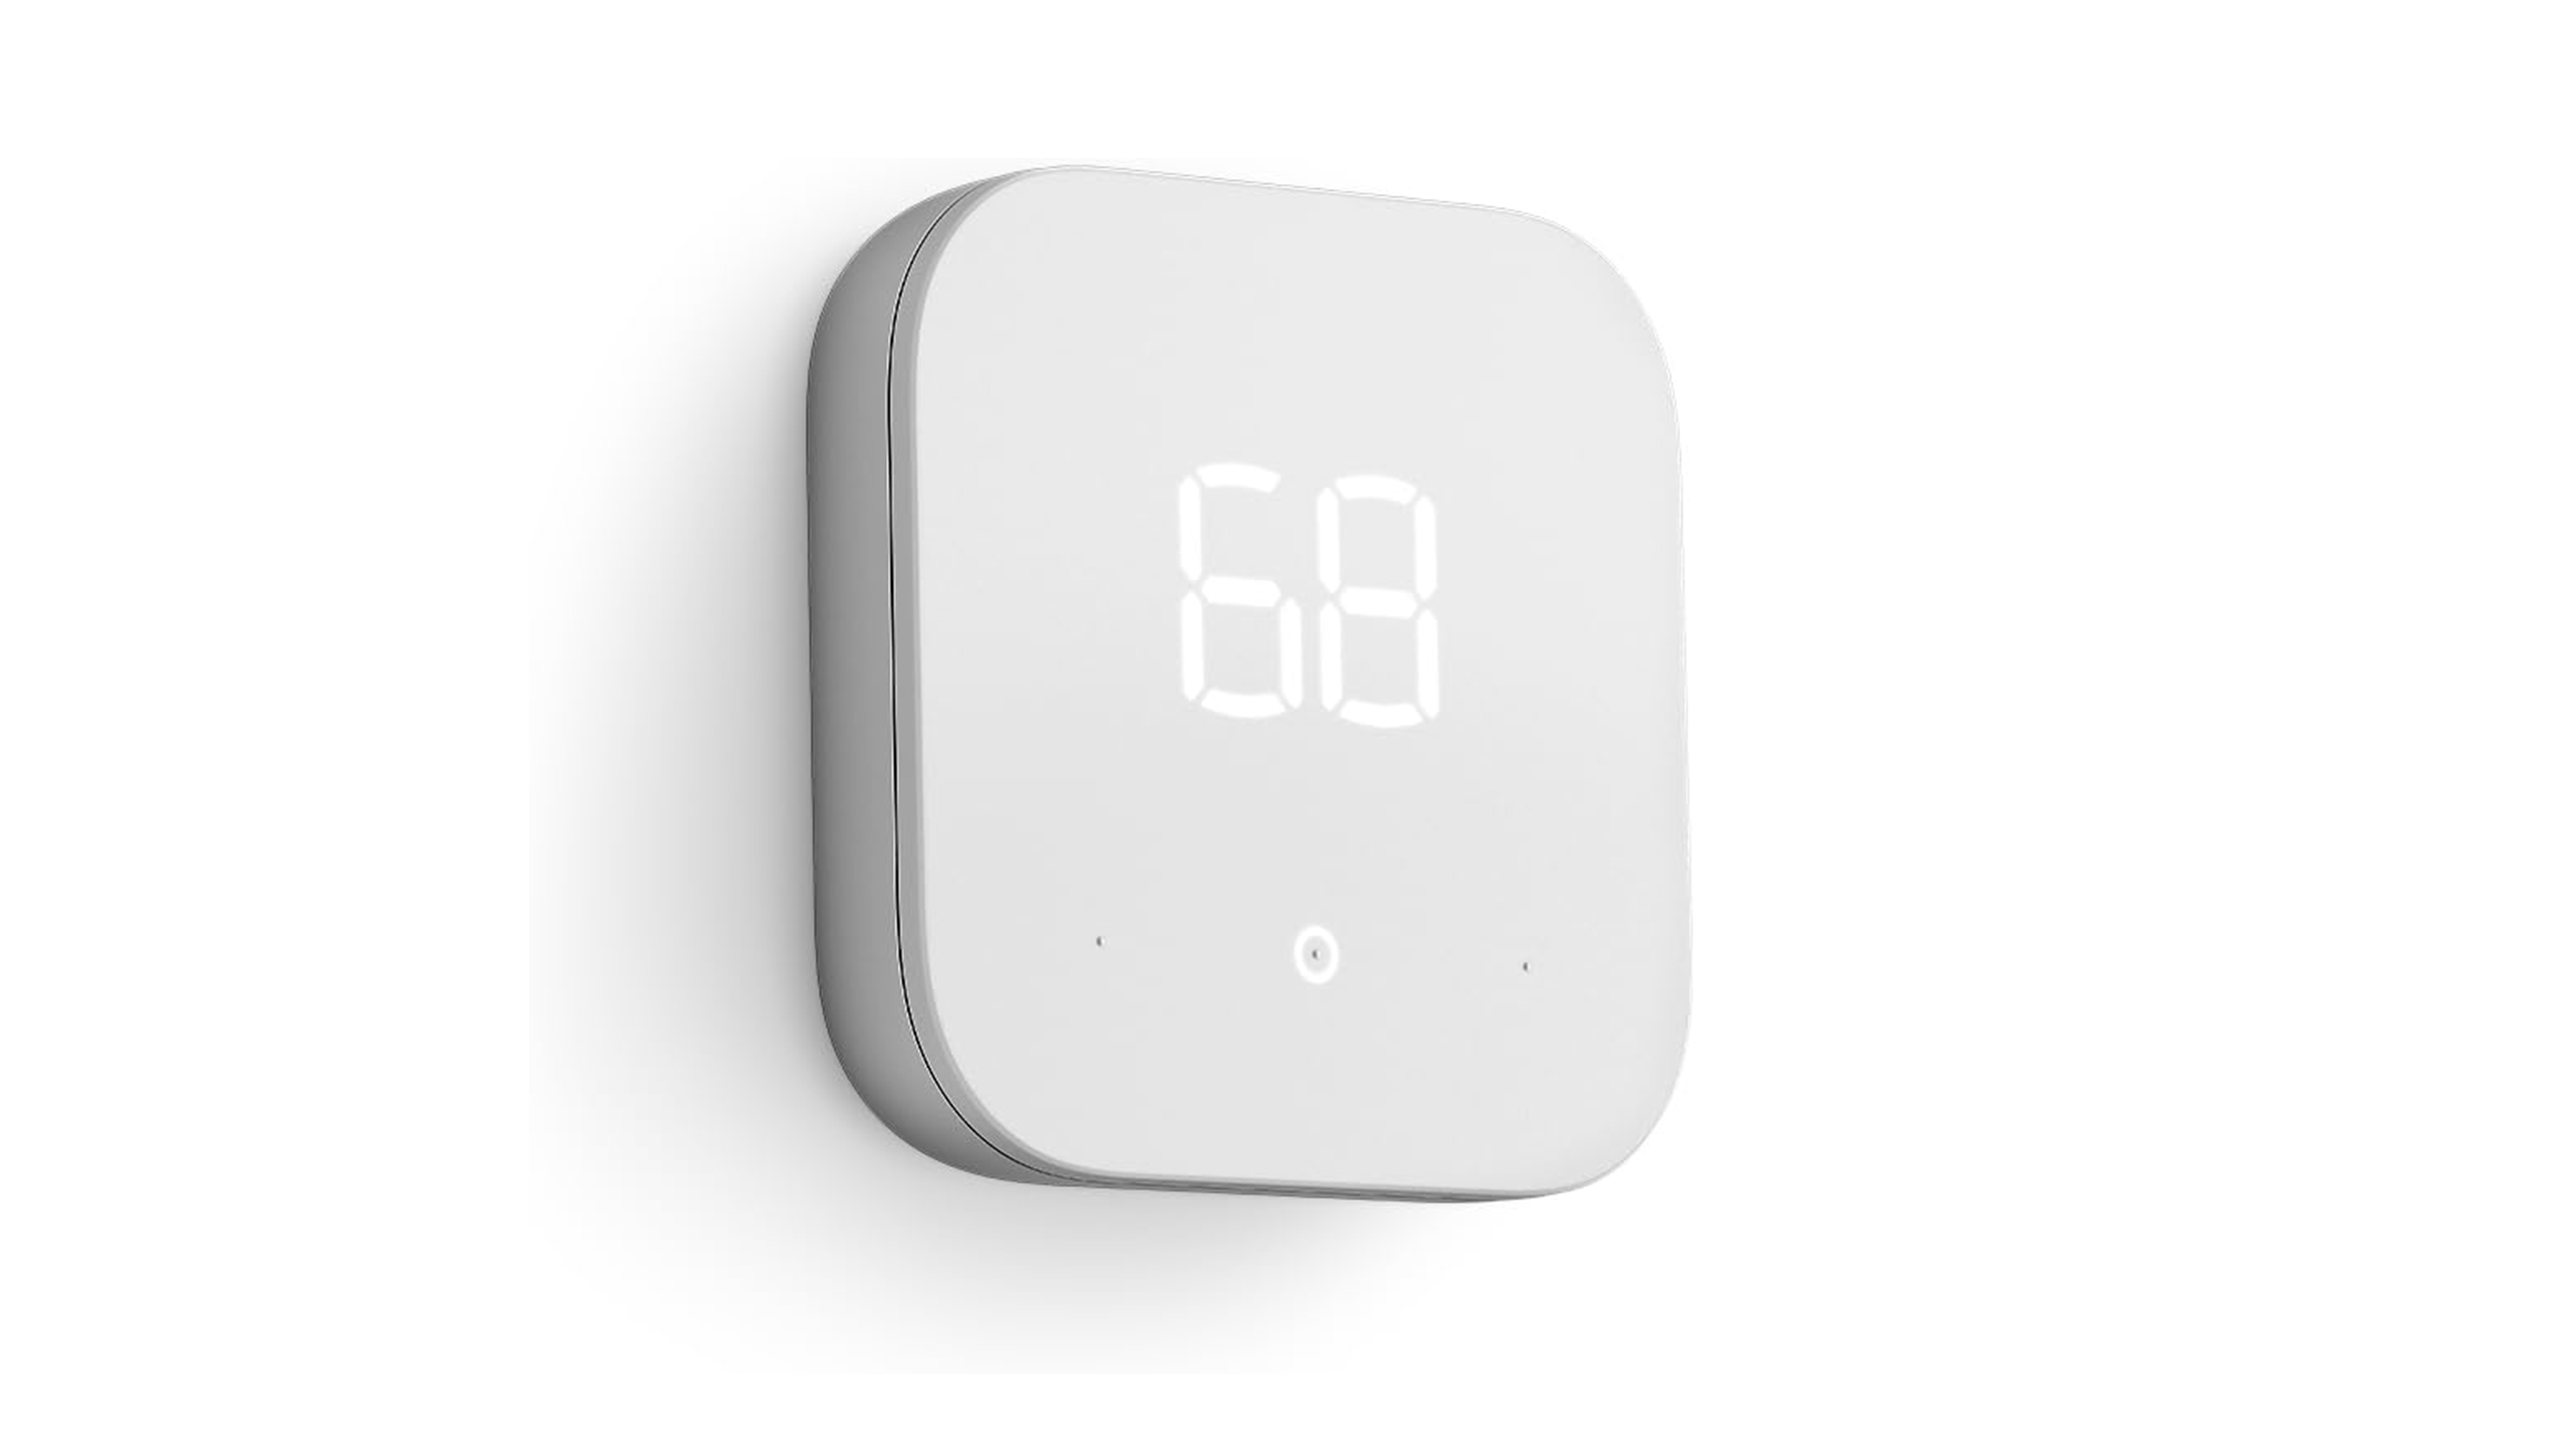 amazon smart thermostat